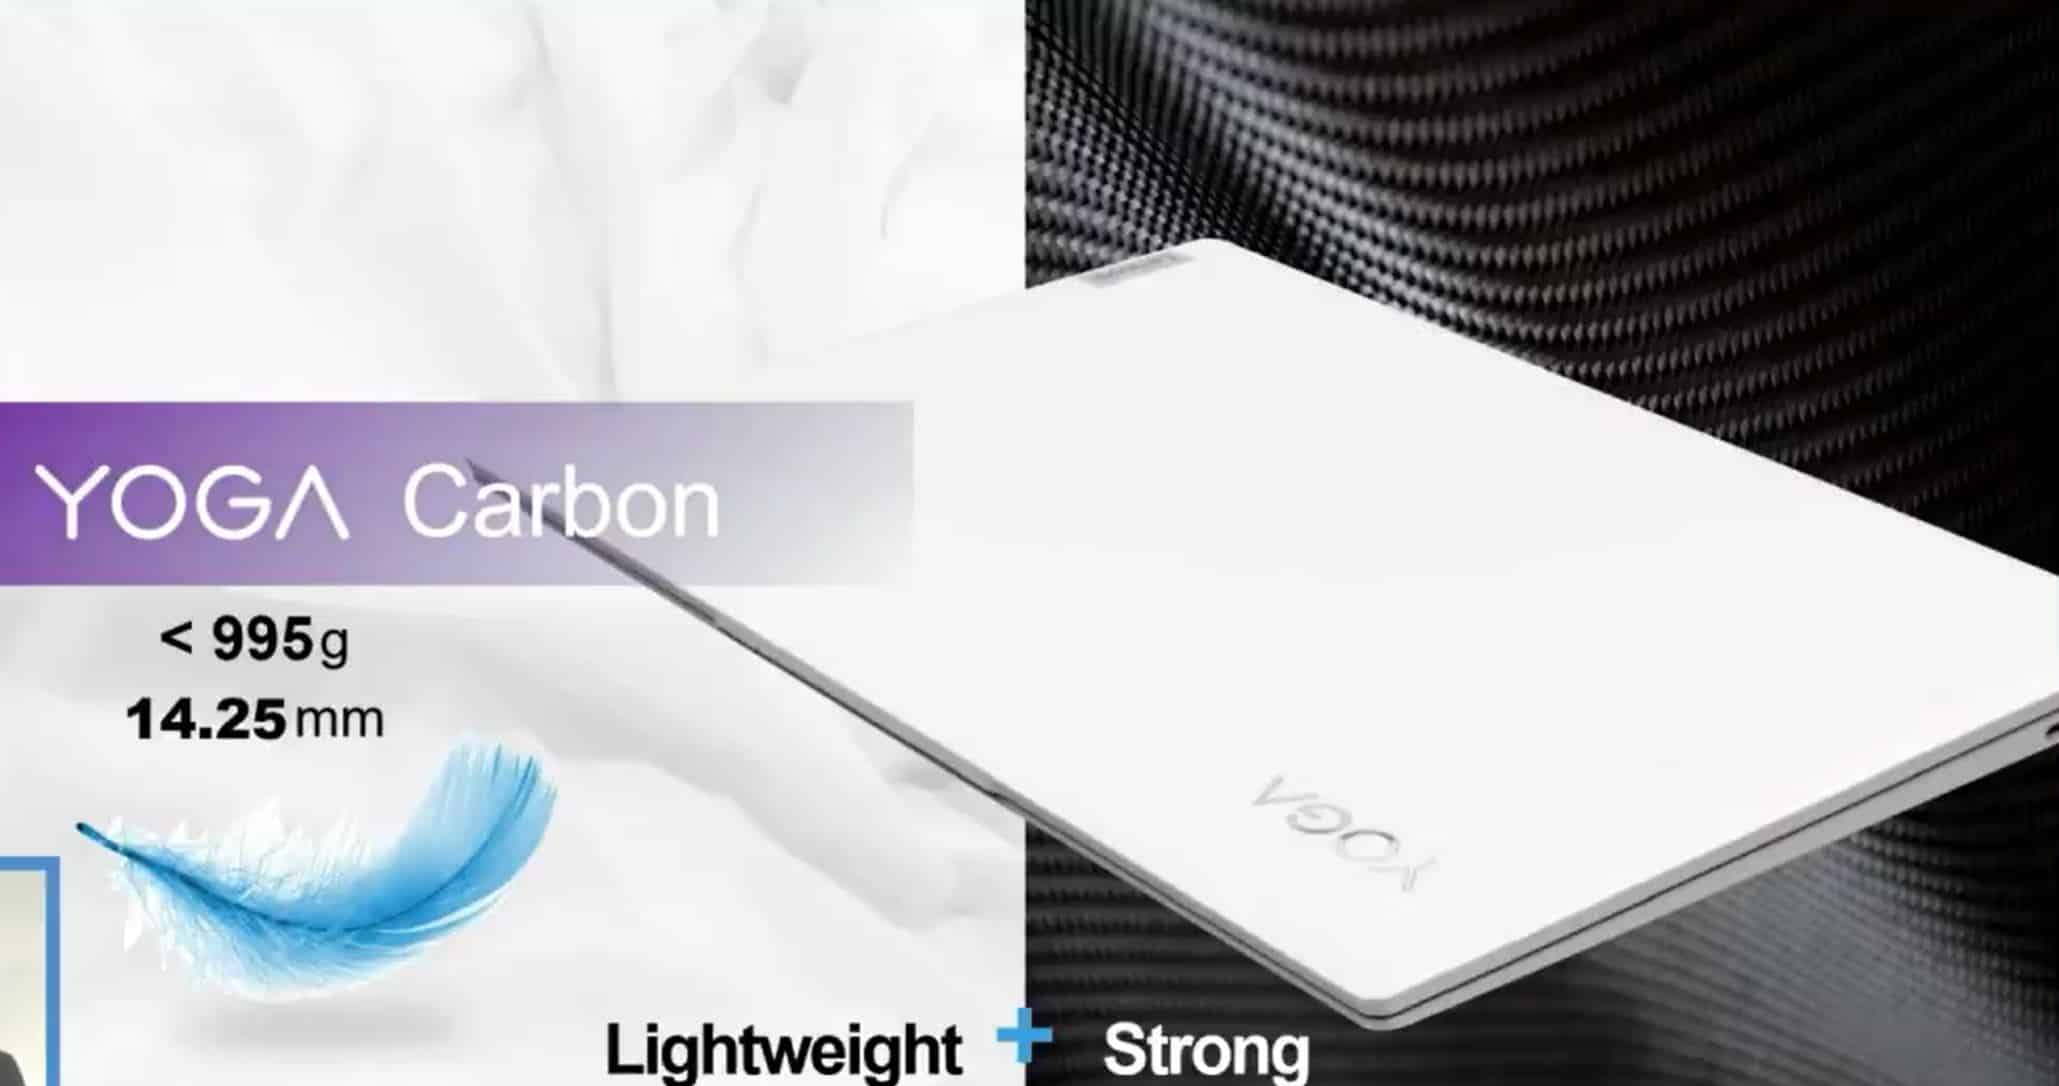 Lenovo Yoga Carbon laptop details leaked online